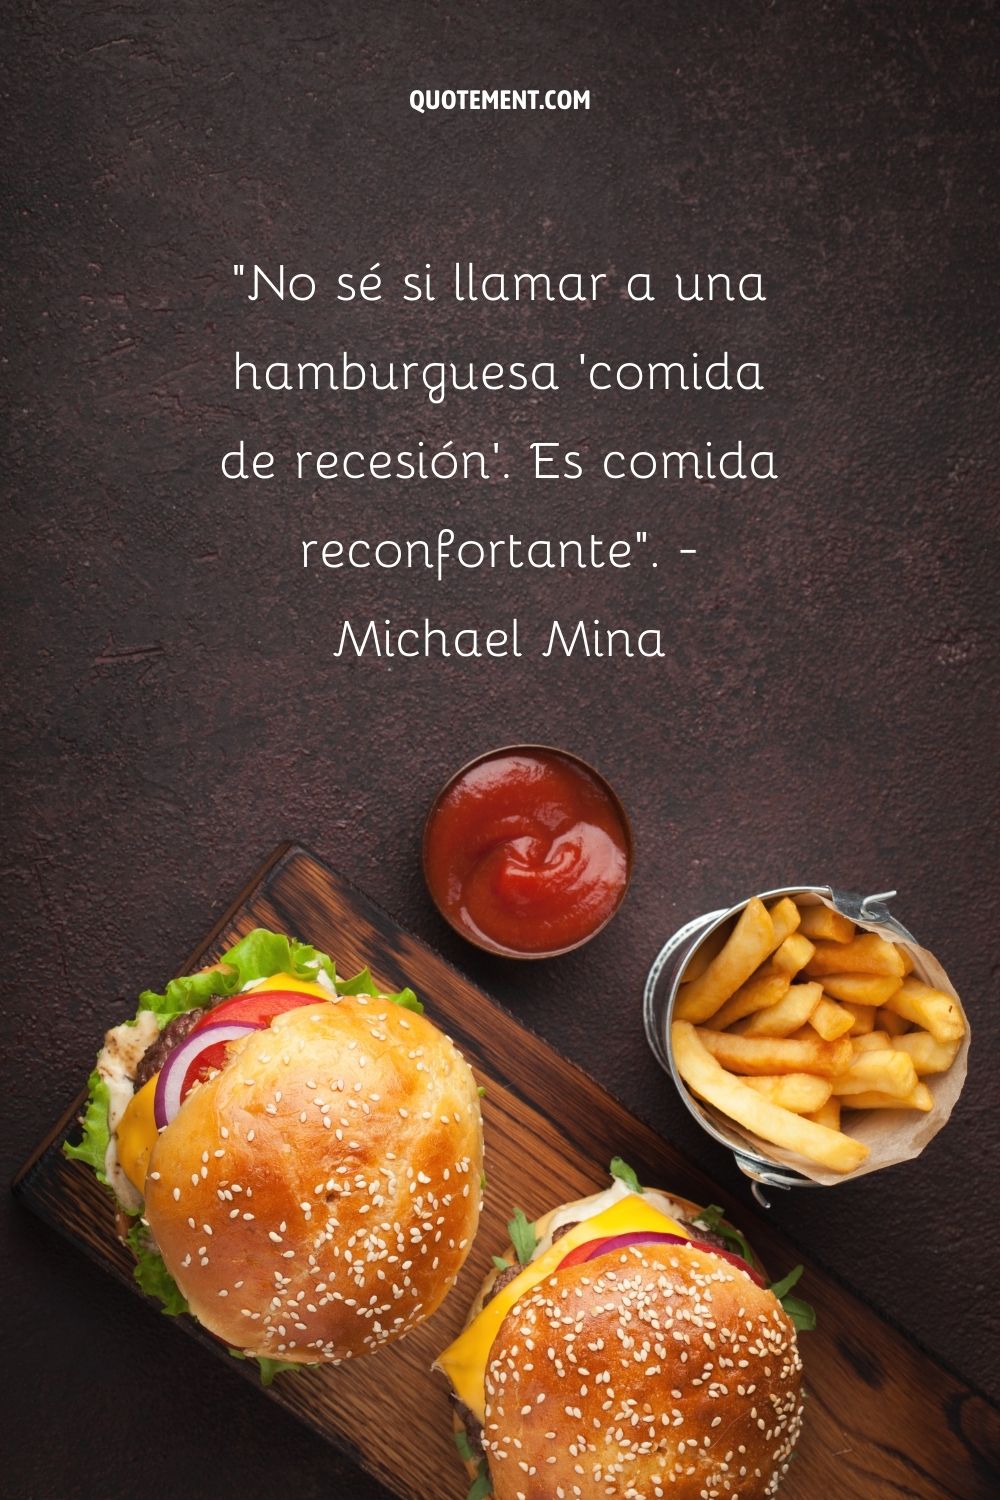 "No sé si llamar a una hamburguesa 'comida de recesión'. Es comida reconfortante". - Michael Mina